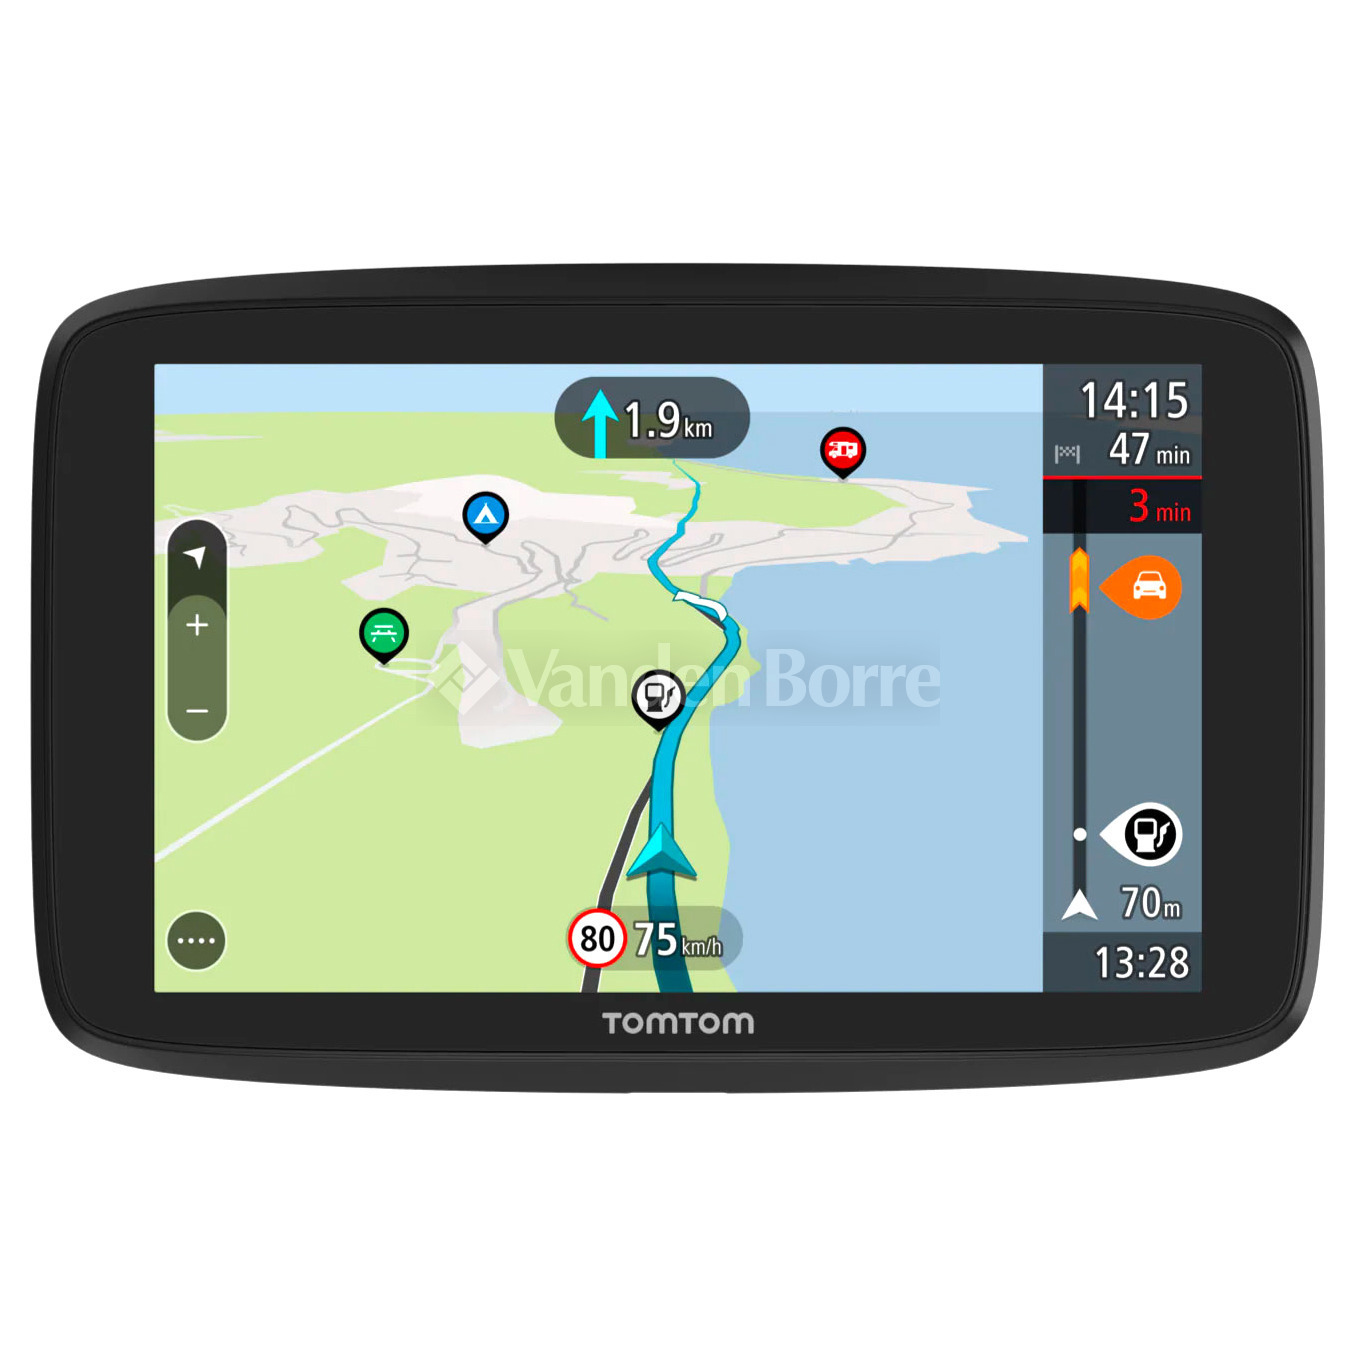 Choisir son traceur GPS voiture 284-quel-traceur-gps-voiture-choisir